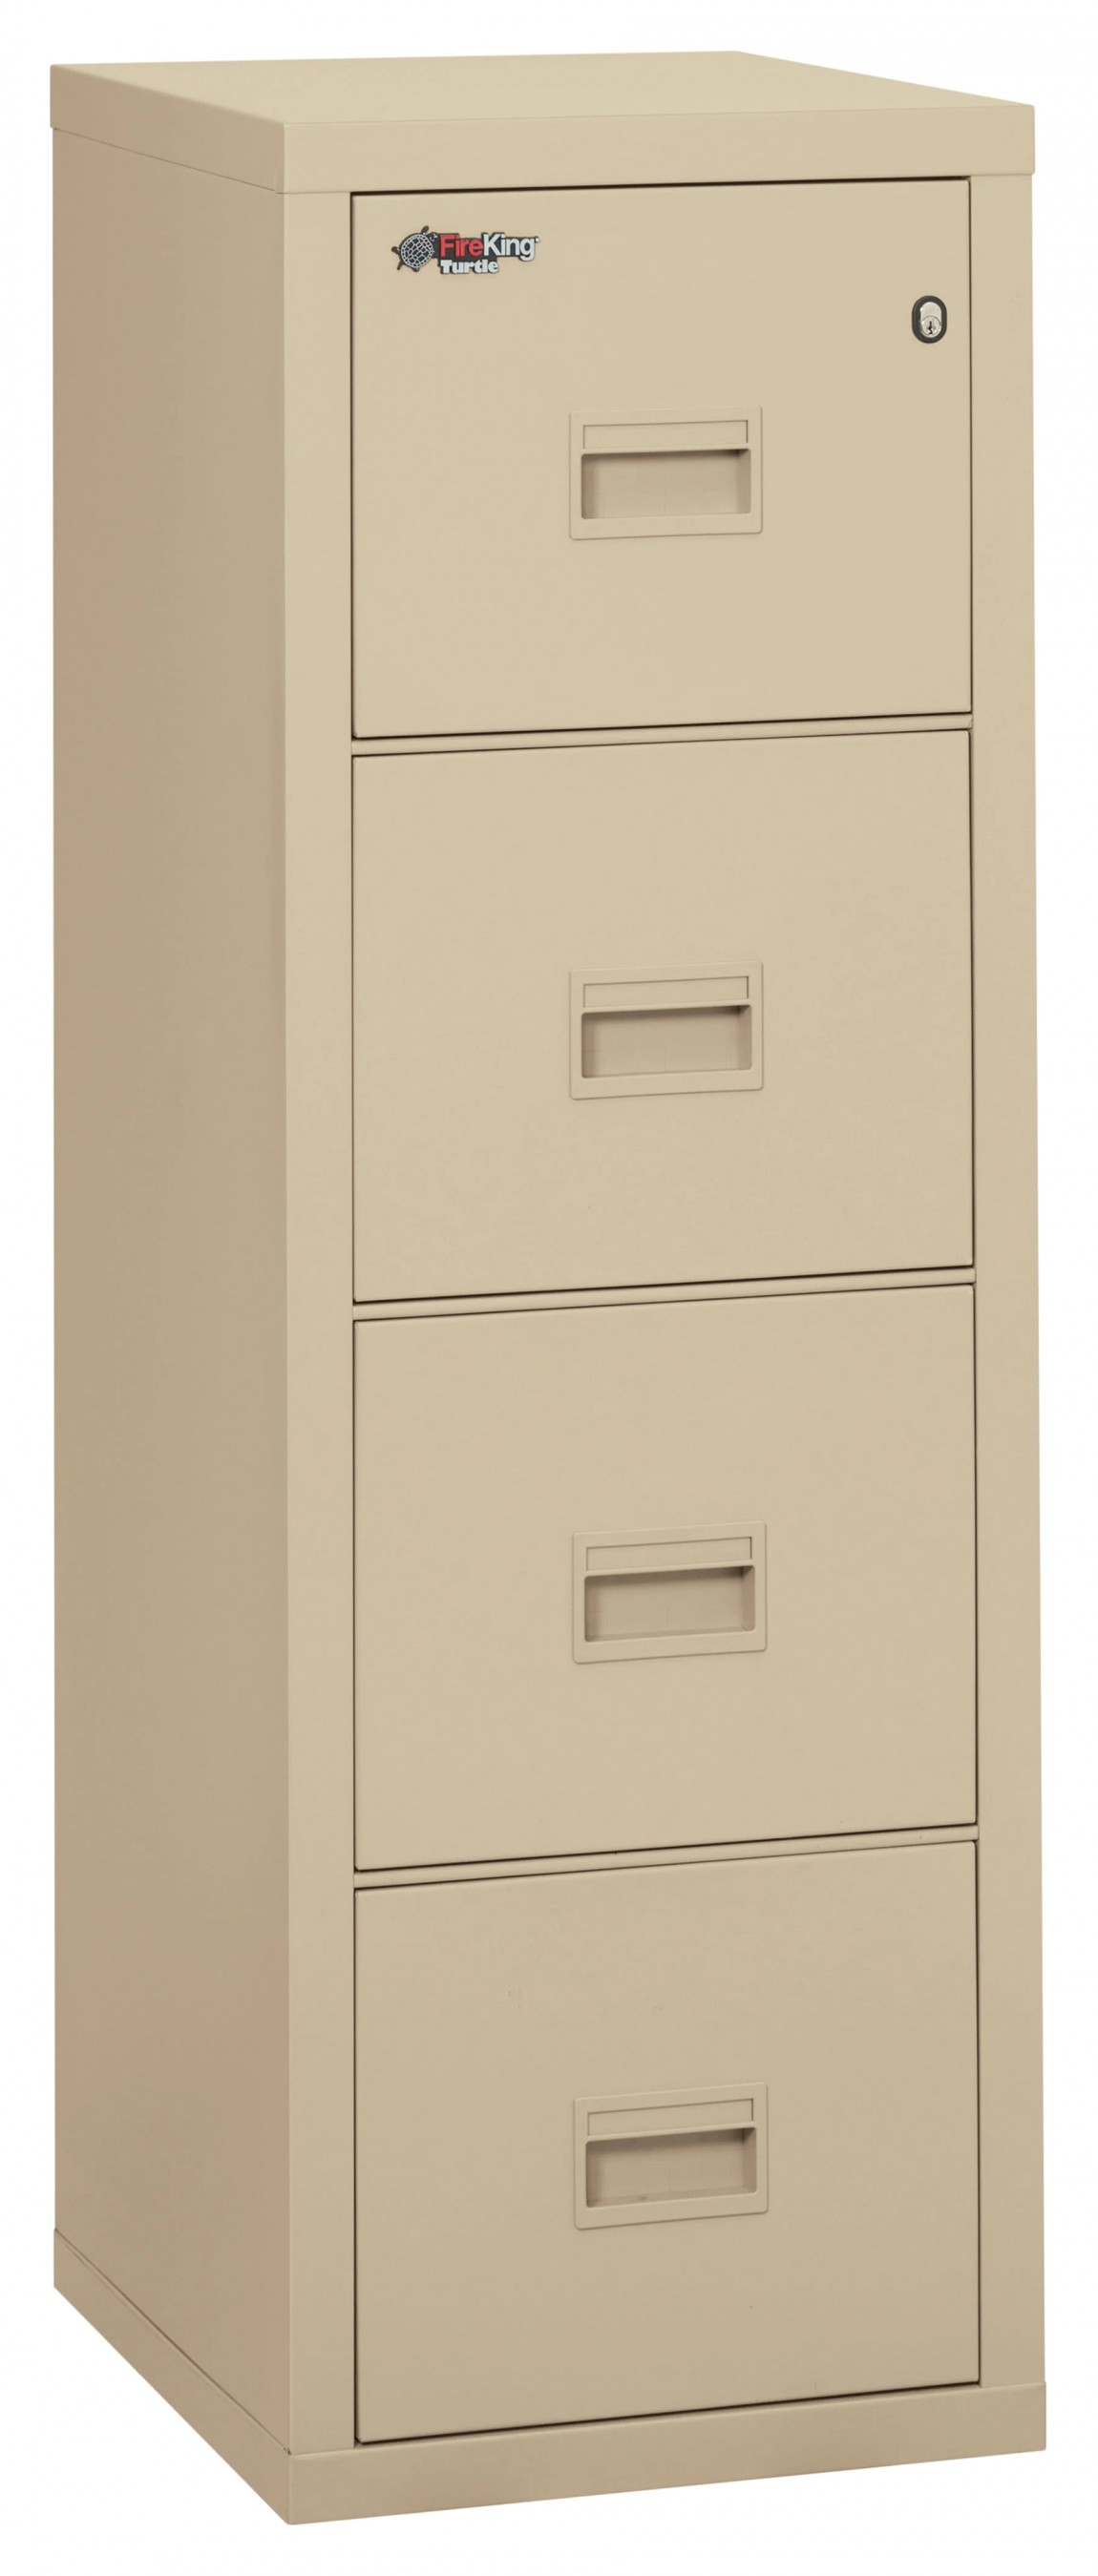 4 Drawer Vertical Fireproof File Cabinet - 18 Wide